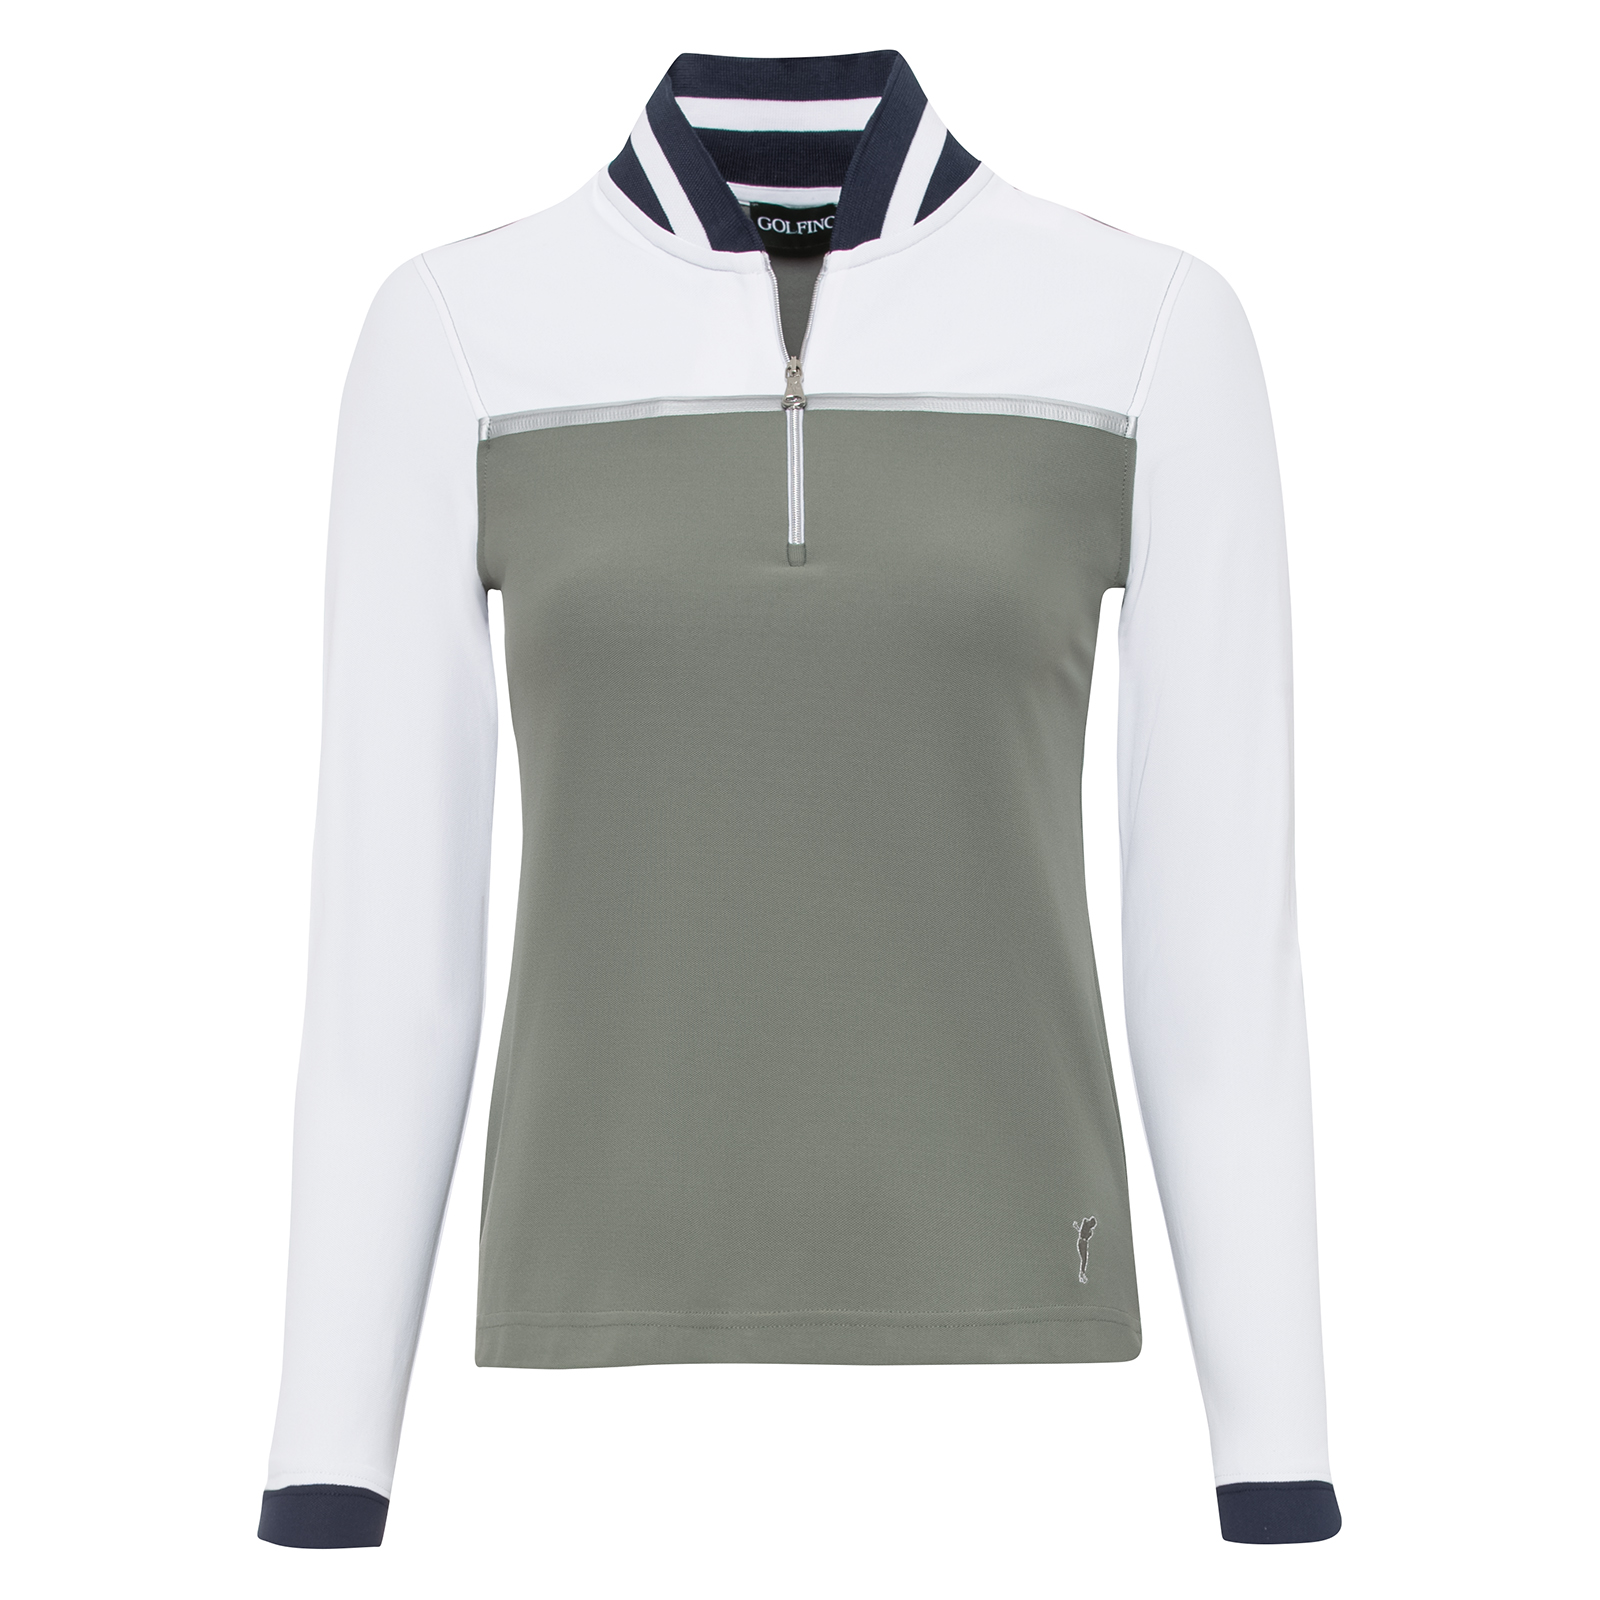 Ladies’ moisture-wicking long-sleeved golf shirt in elegant colour blocking design 